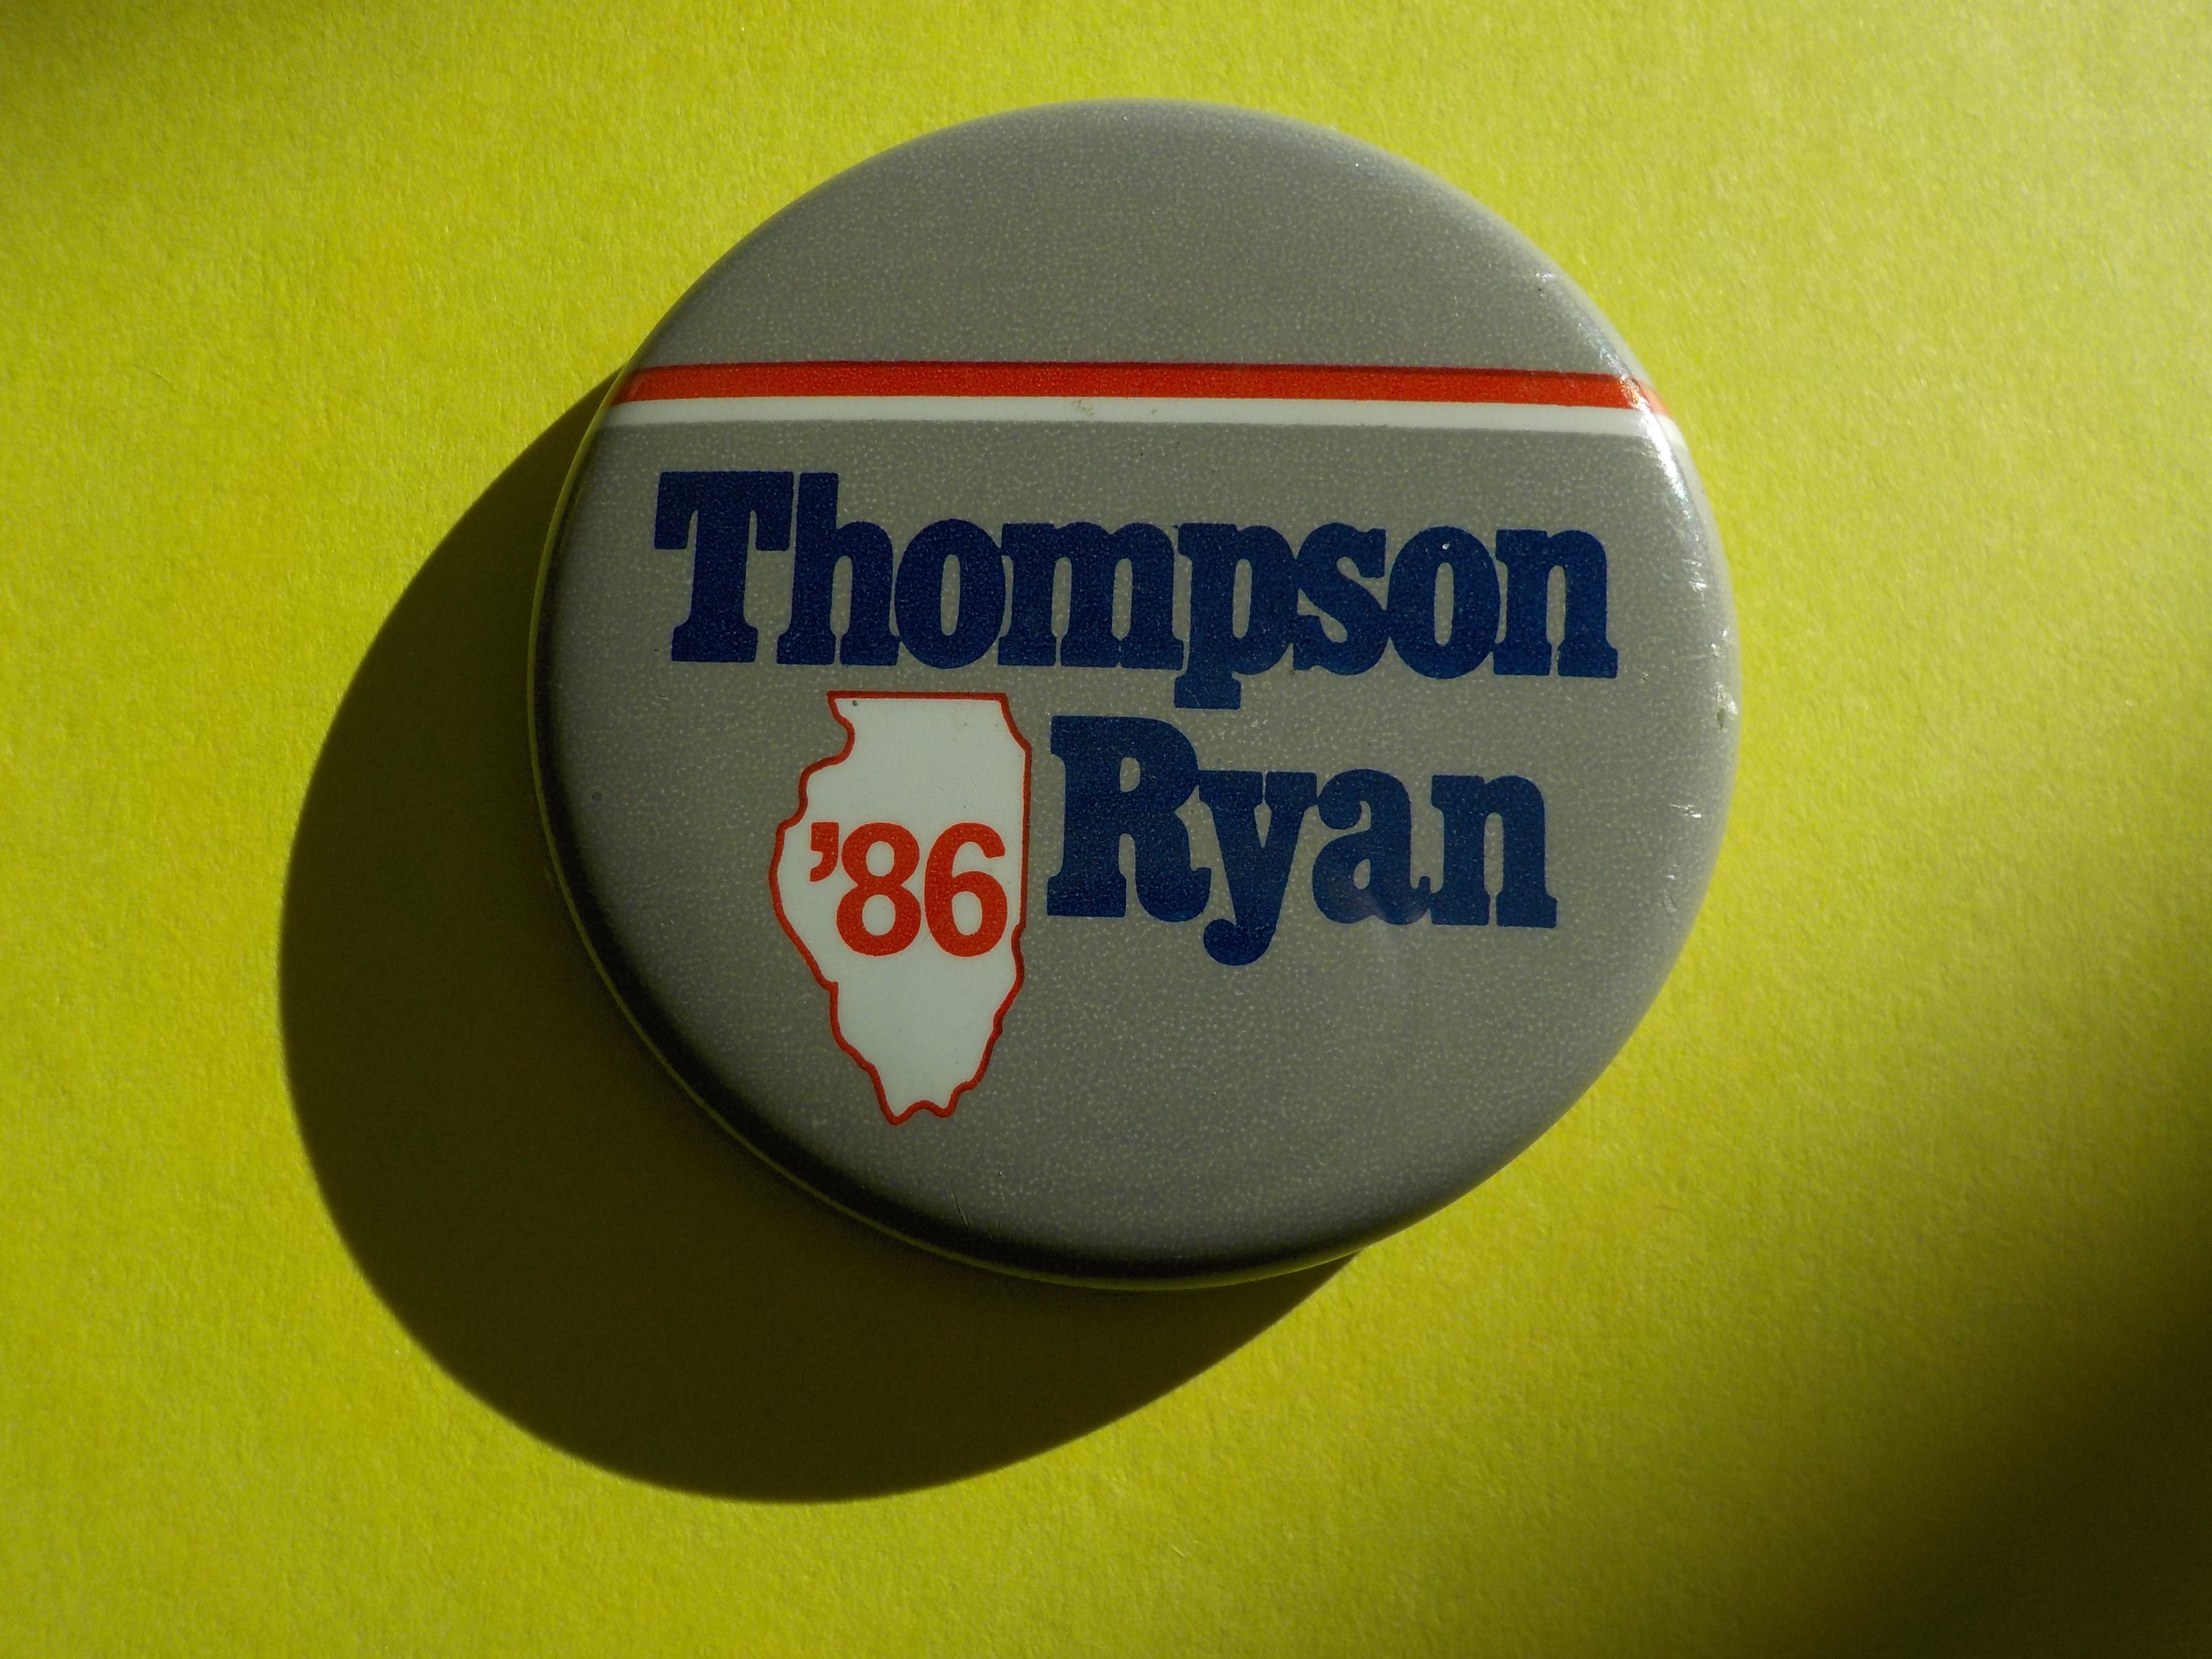 Thompson Ryan